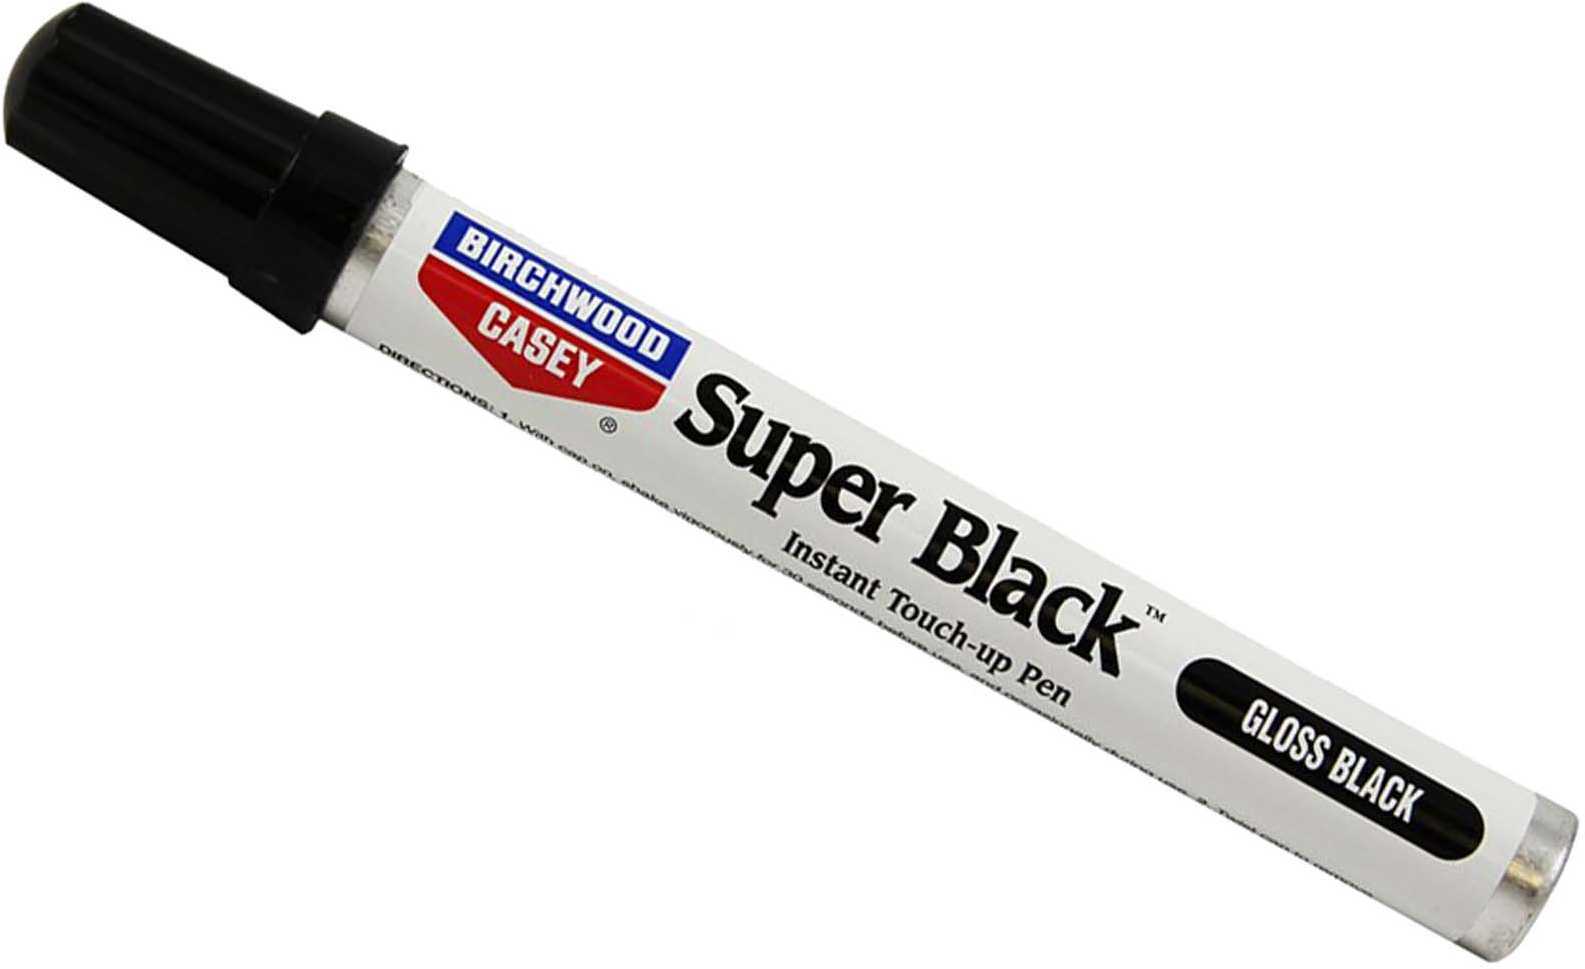 Birchwood Casey 15111 Super Black Touch-Up Pen Gloss